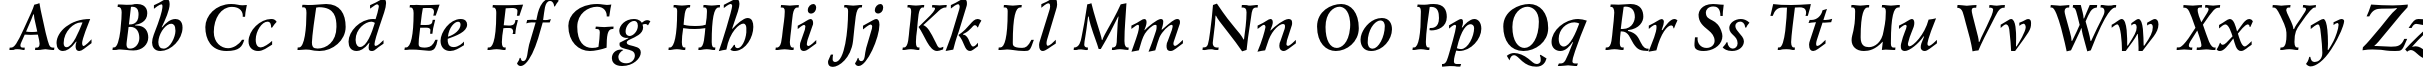 Пример написания английского алфавита шрифтом LazurskiC Bold Italic